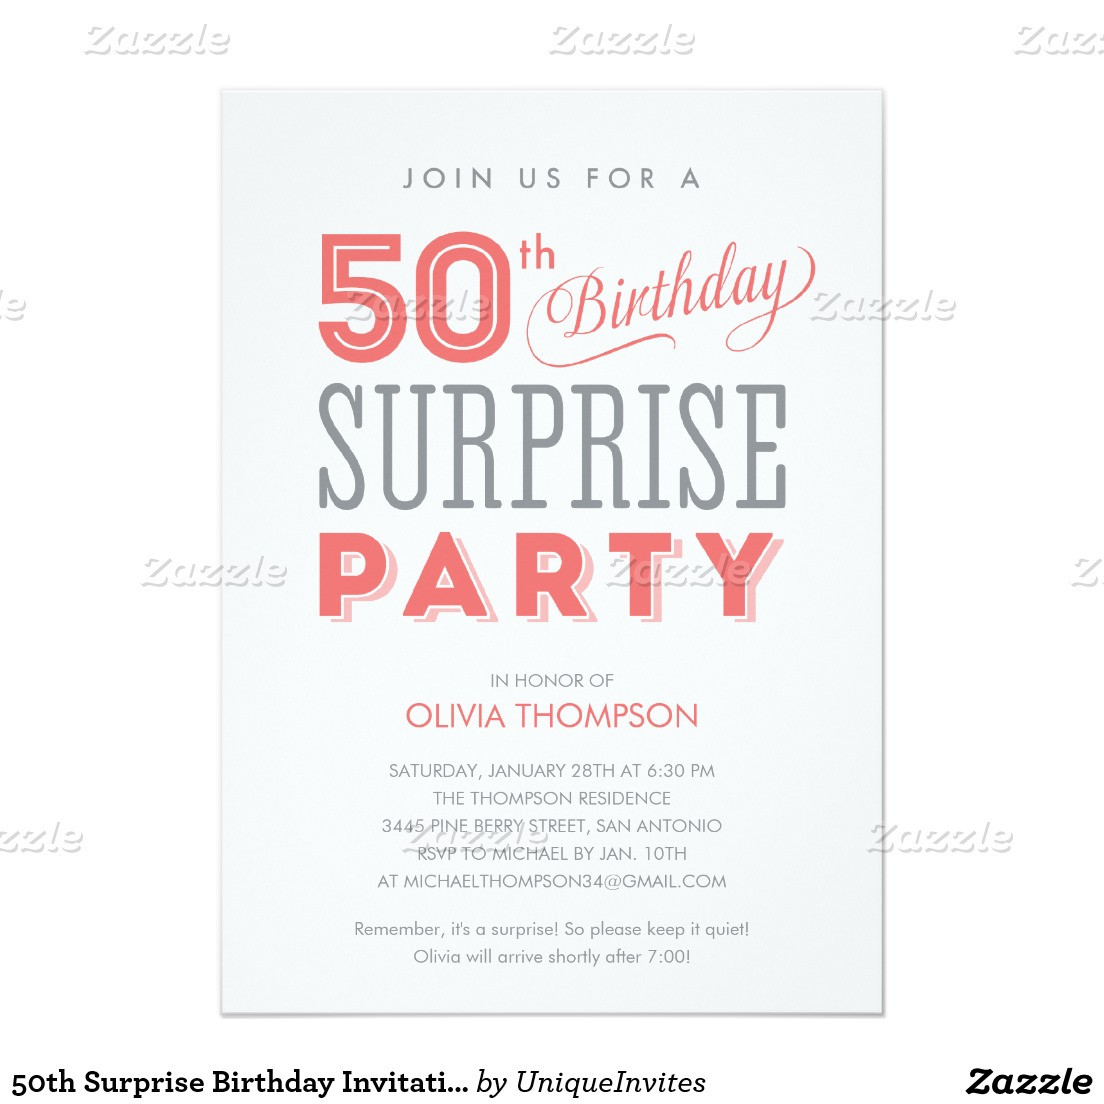 50th Birthday Party Invitation Wording
 Surprise 50th Birthday Party Invitation Wording